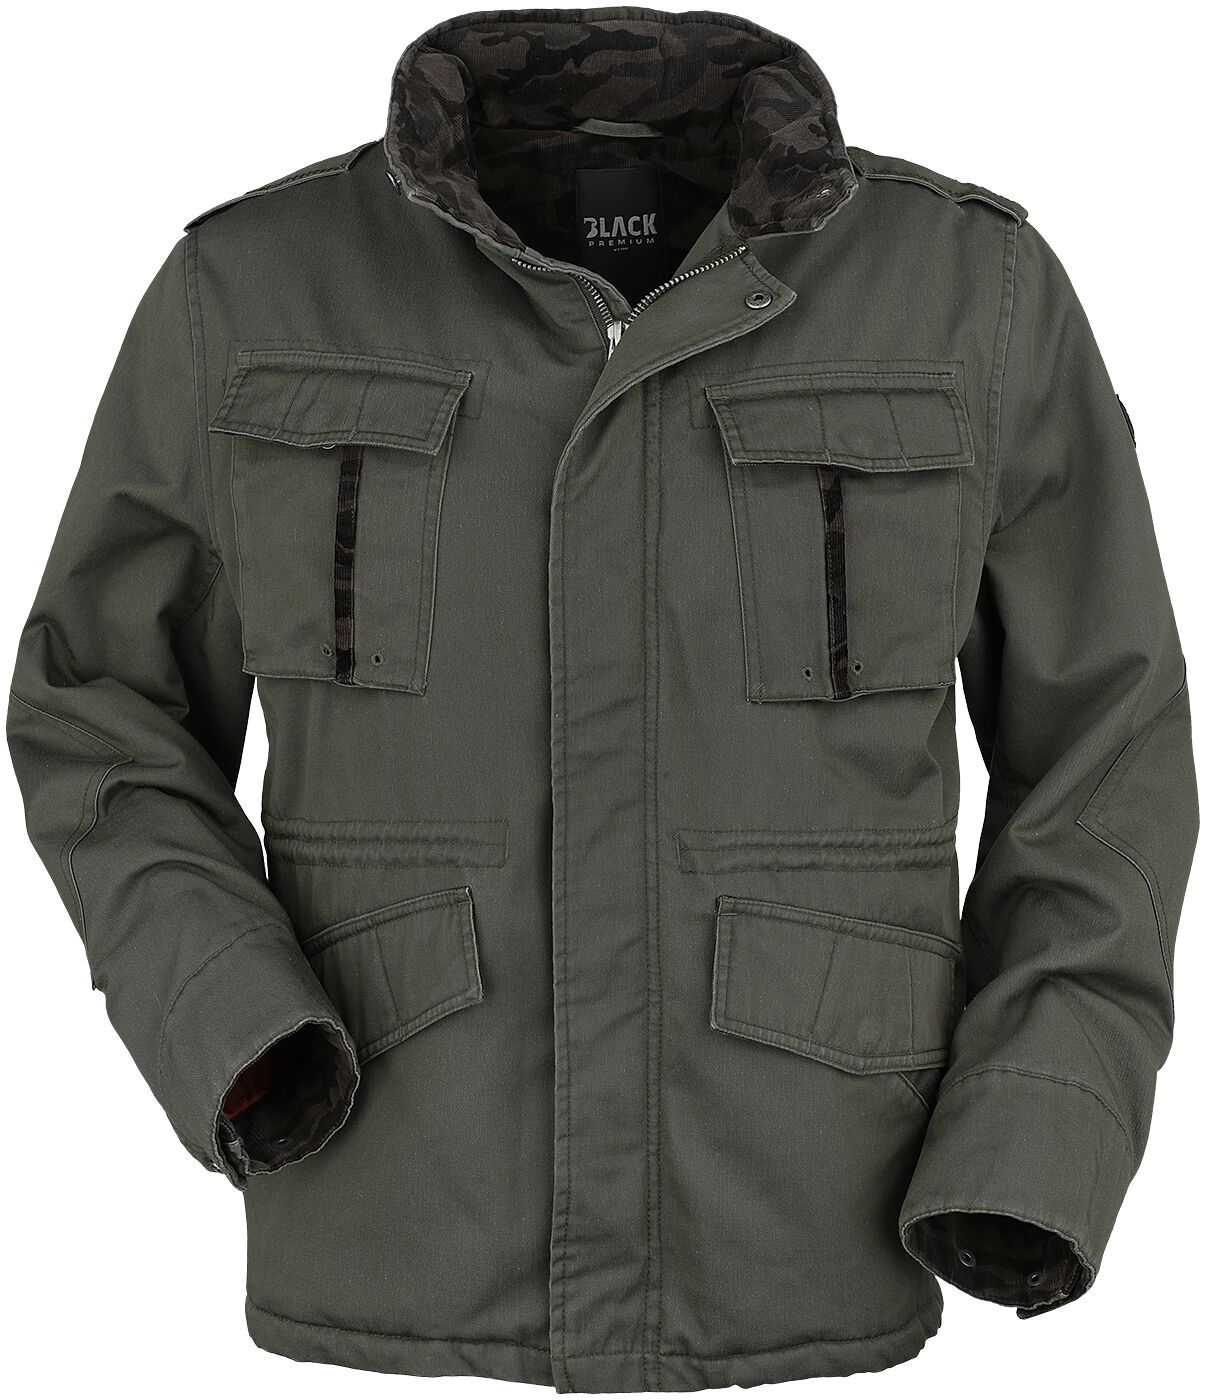 Black Premium by EMP Jacket with hidden hood Winterjacke oliv olivcamo in XXL